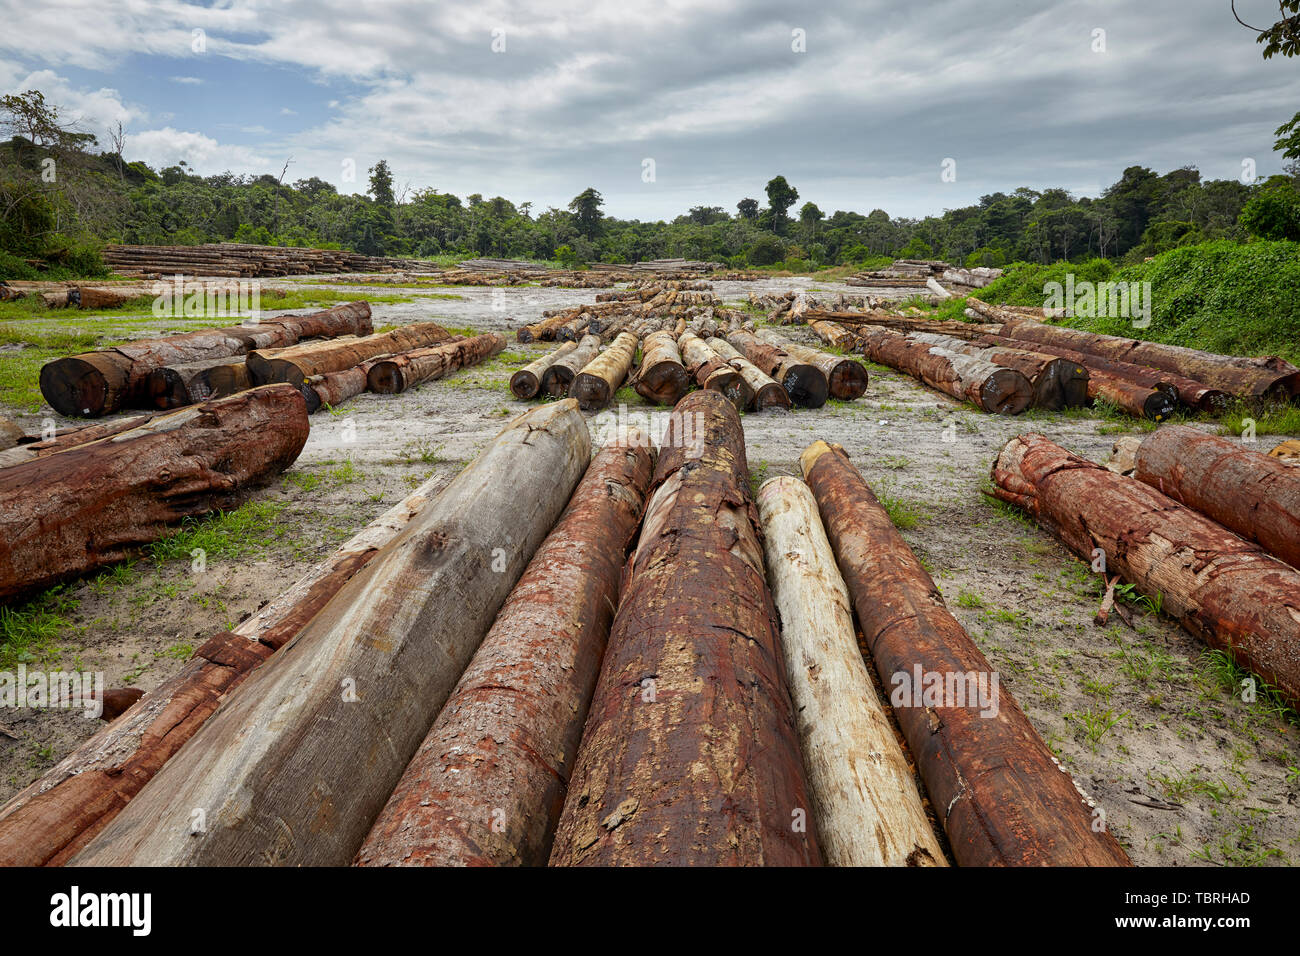 DTL Demerara Timbers Limited at Mabura Hill Sawmill in Guyana South America Stock Photo